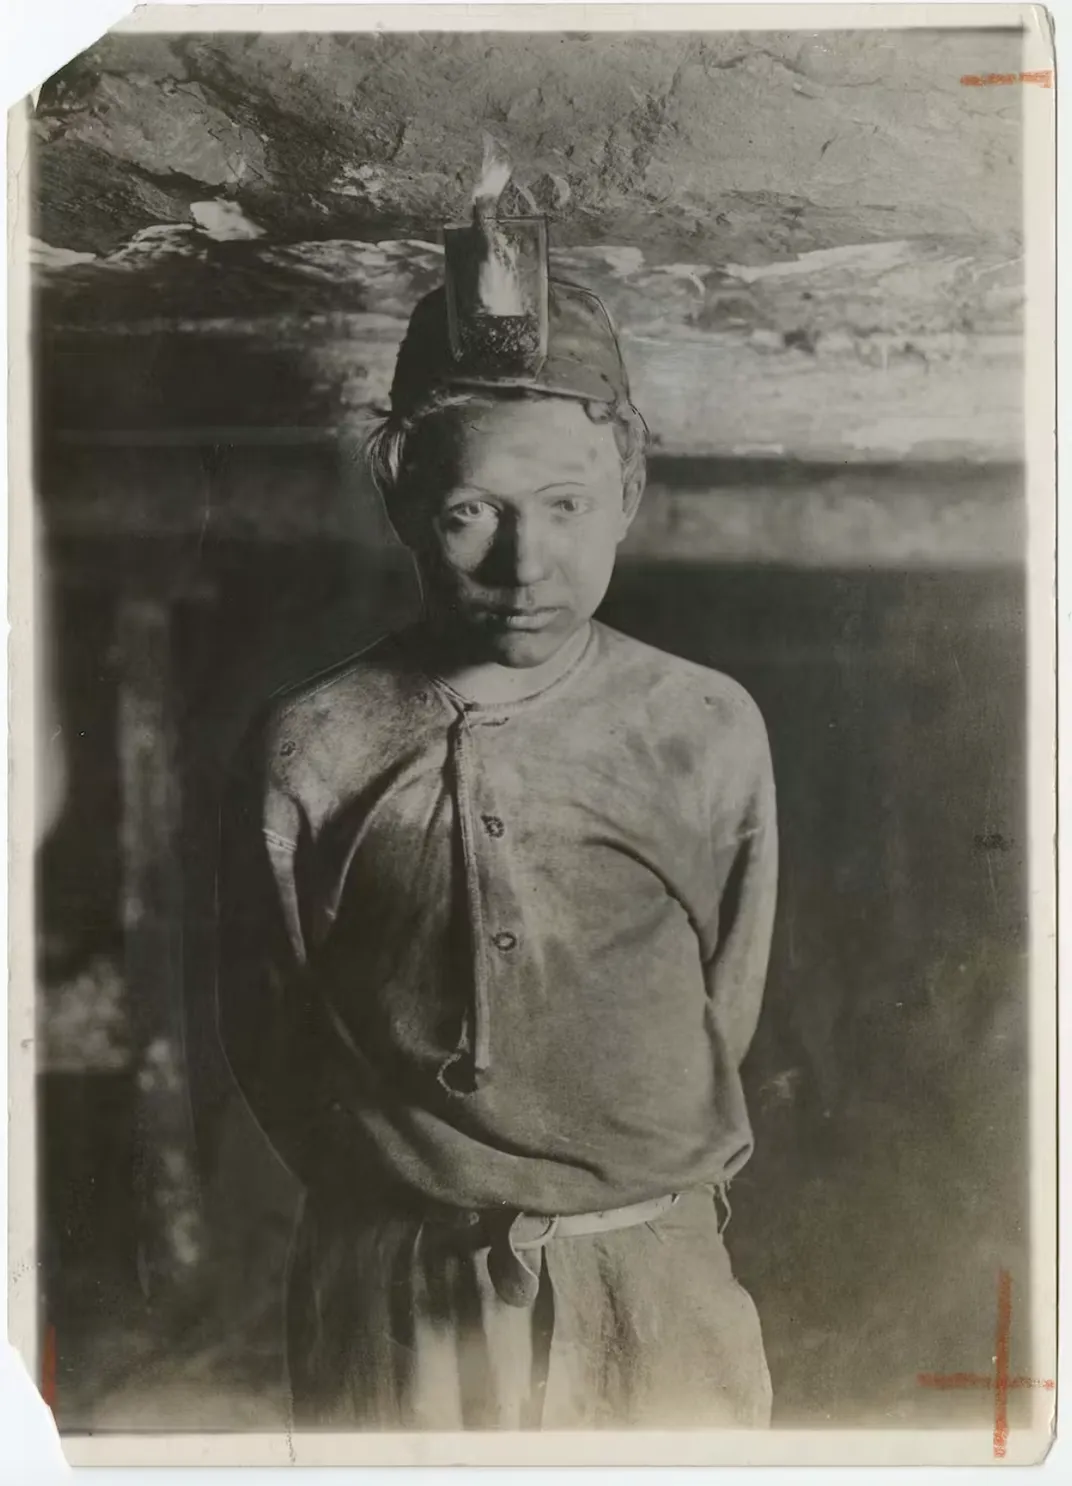 Lewis Wickes Hine, Trapper Boy, Turkey Knob Mine, MacDonald, West Virginia, 1908